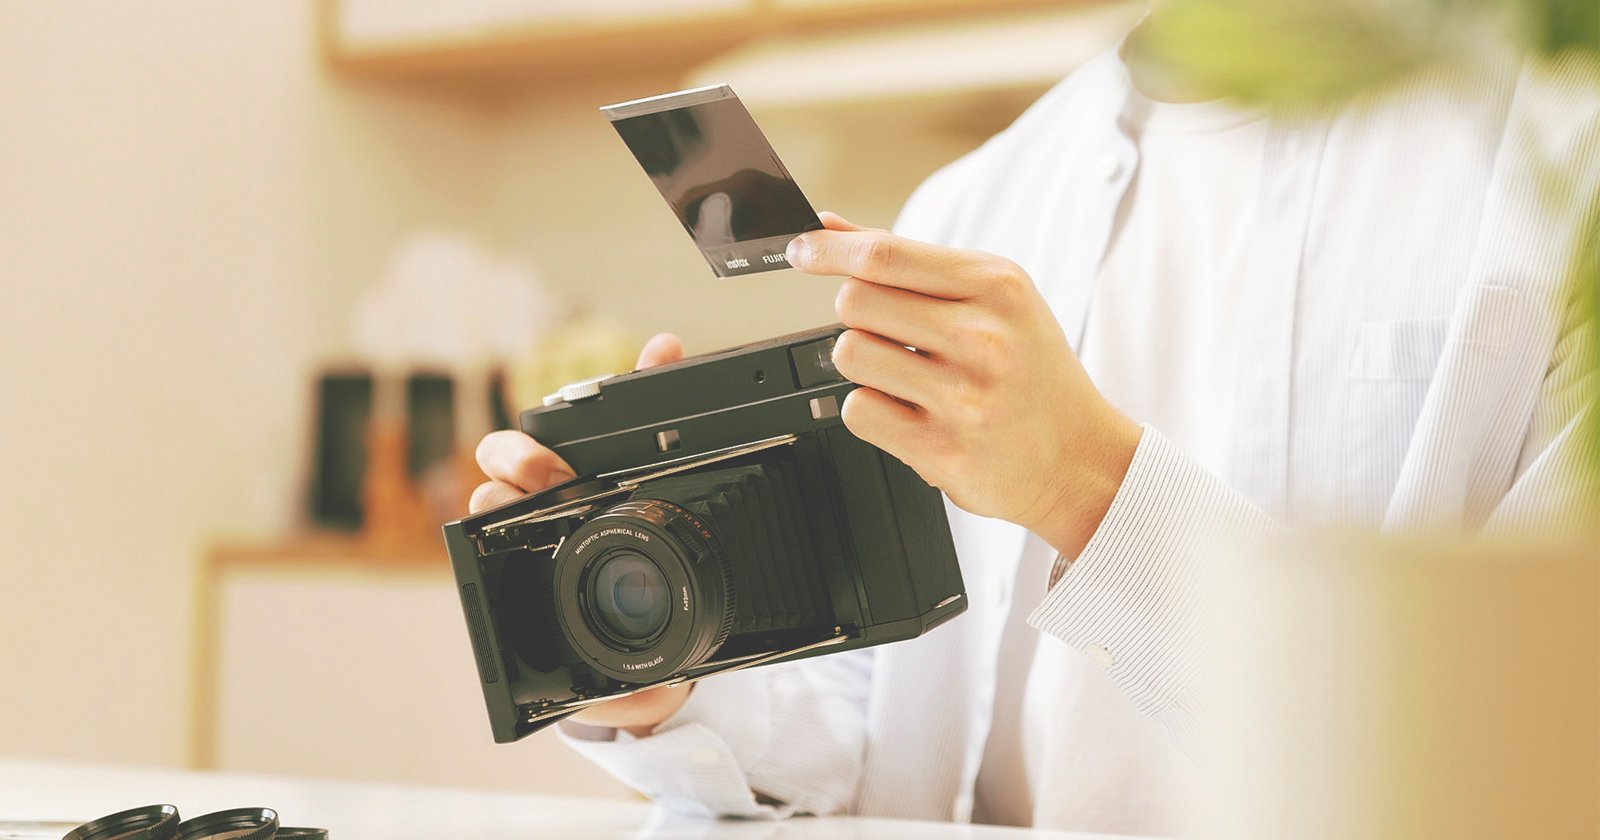 SLR670-S (Type i) - Vintage Polaroid Camera with Flash Sync